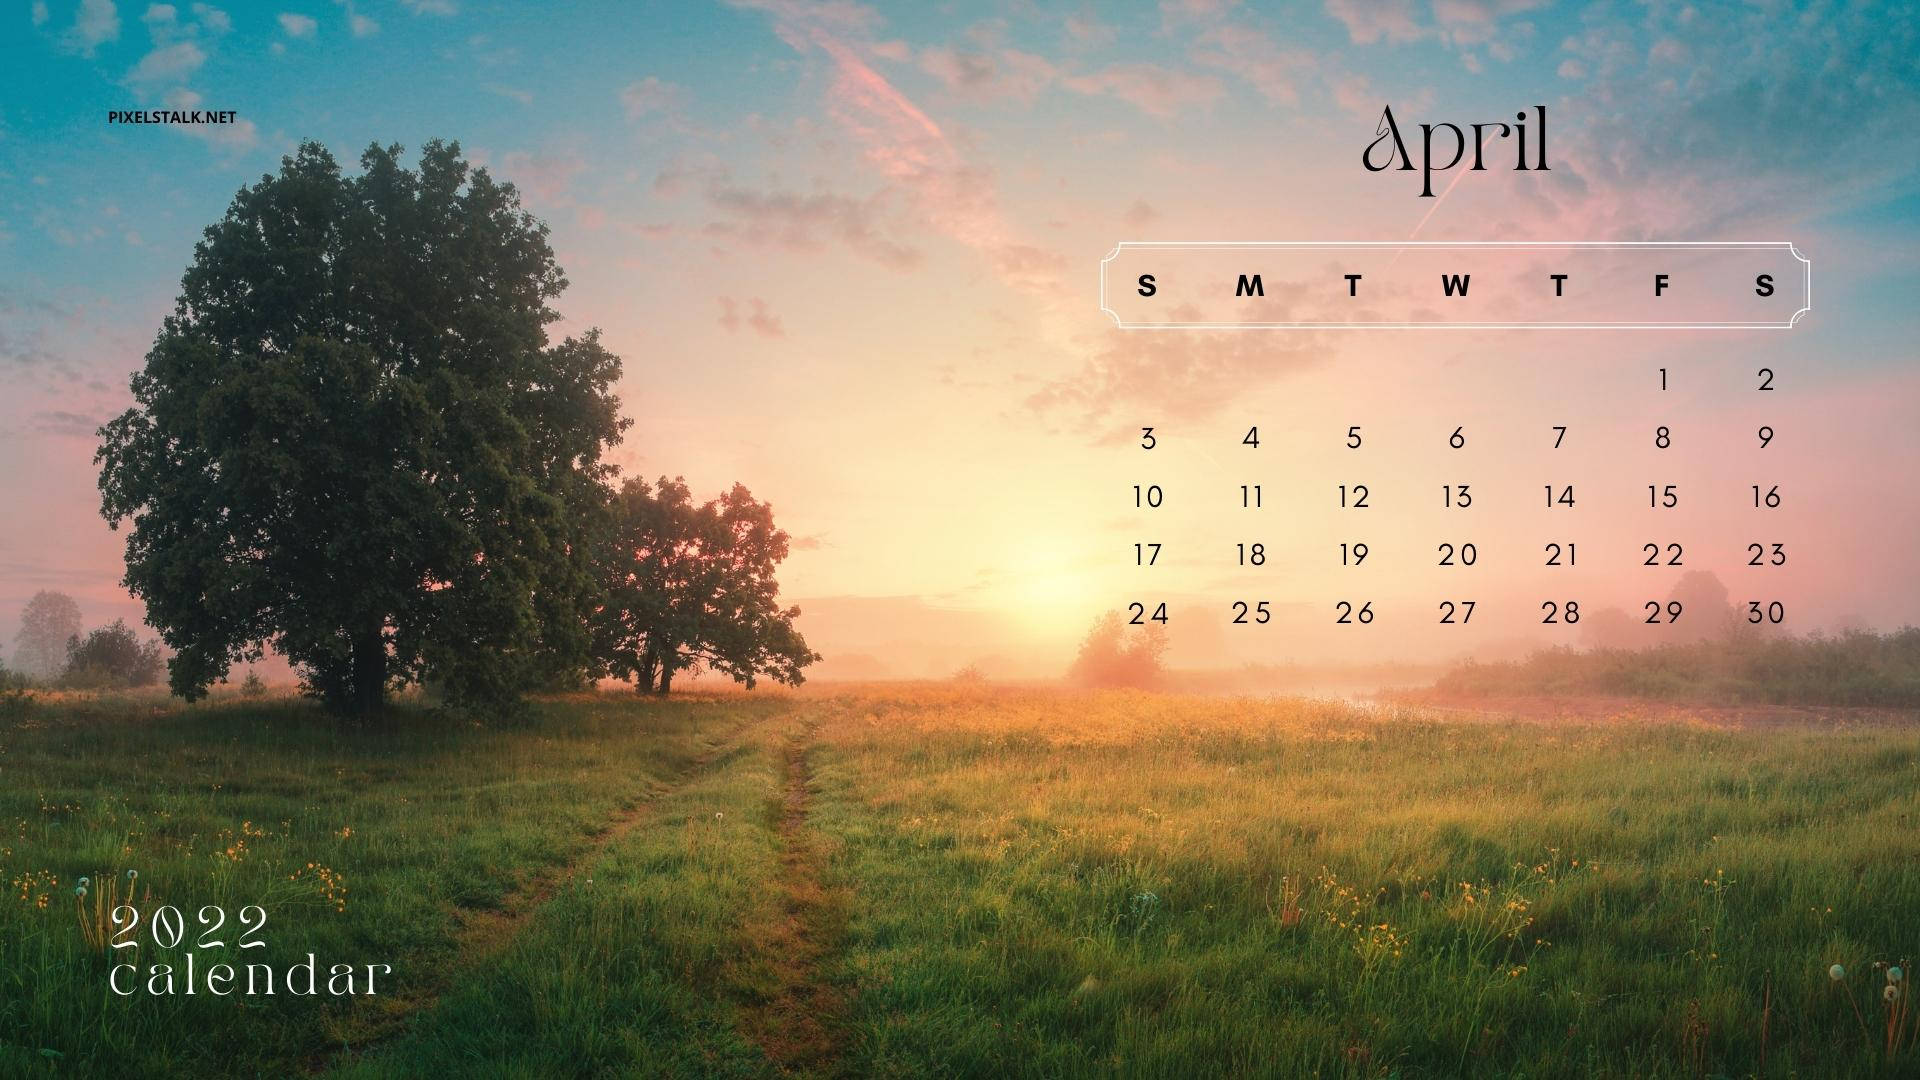 April 2022 Kalender Wallpaper